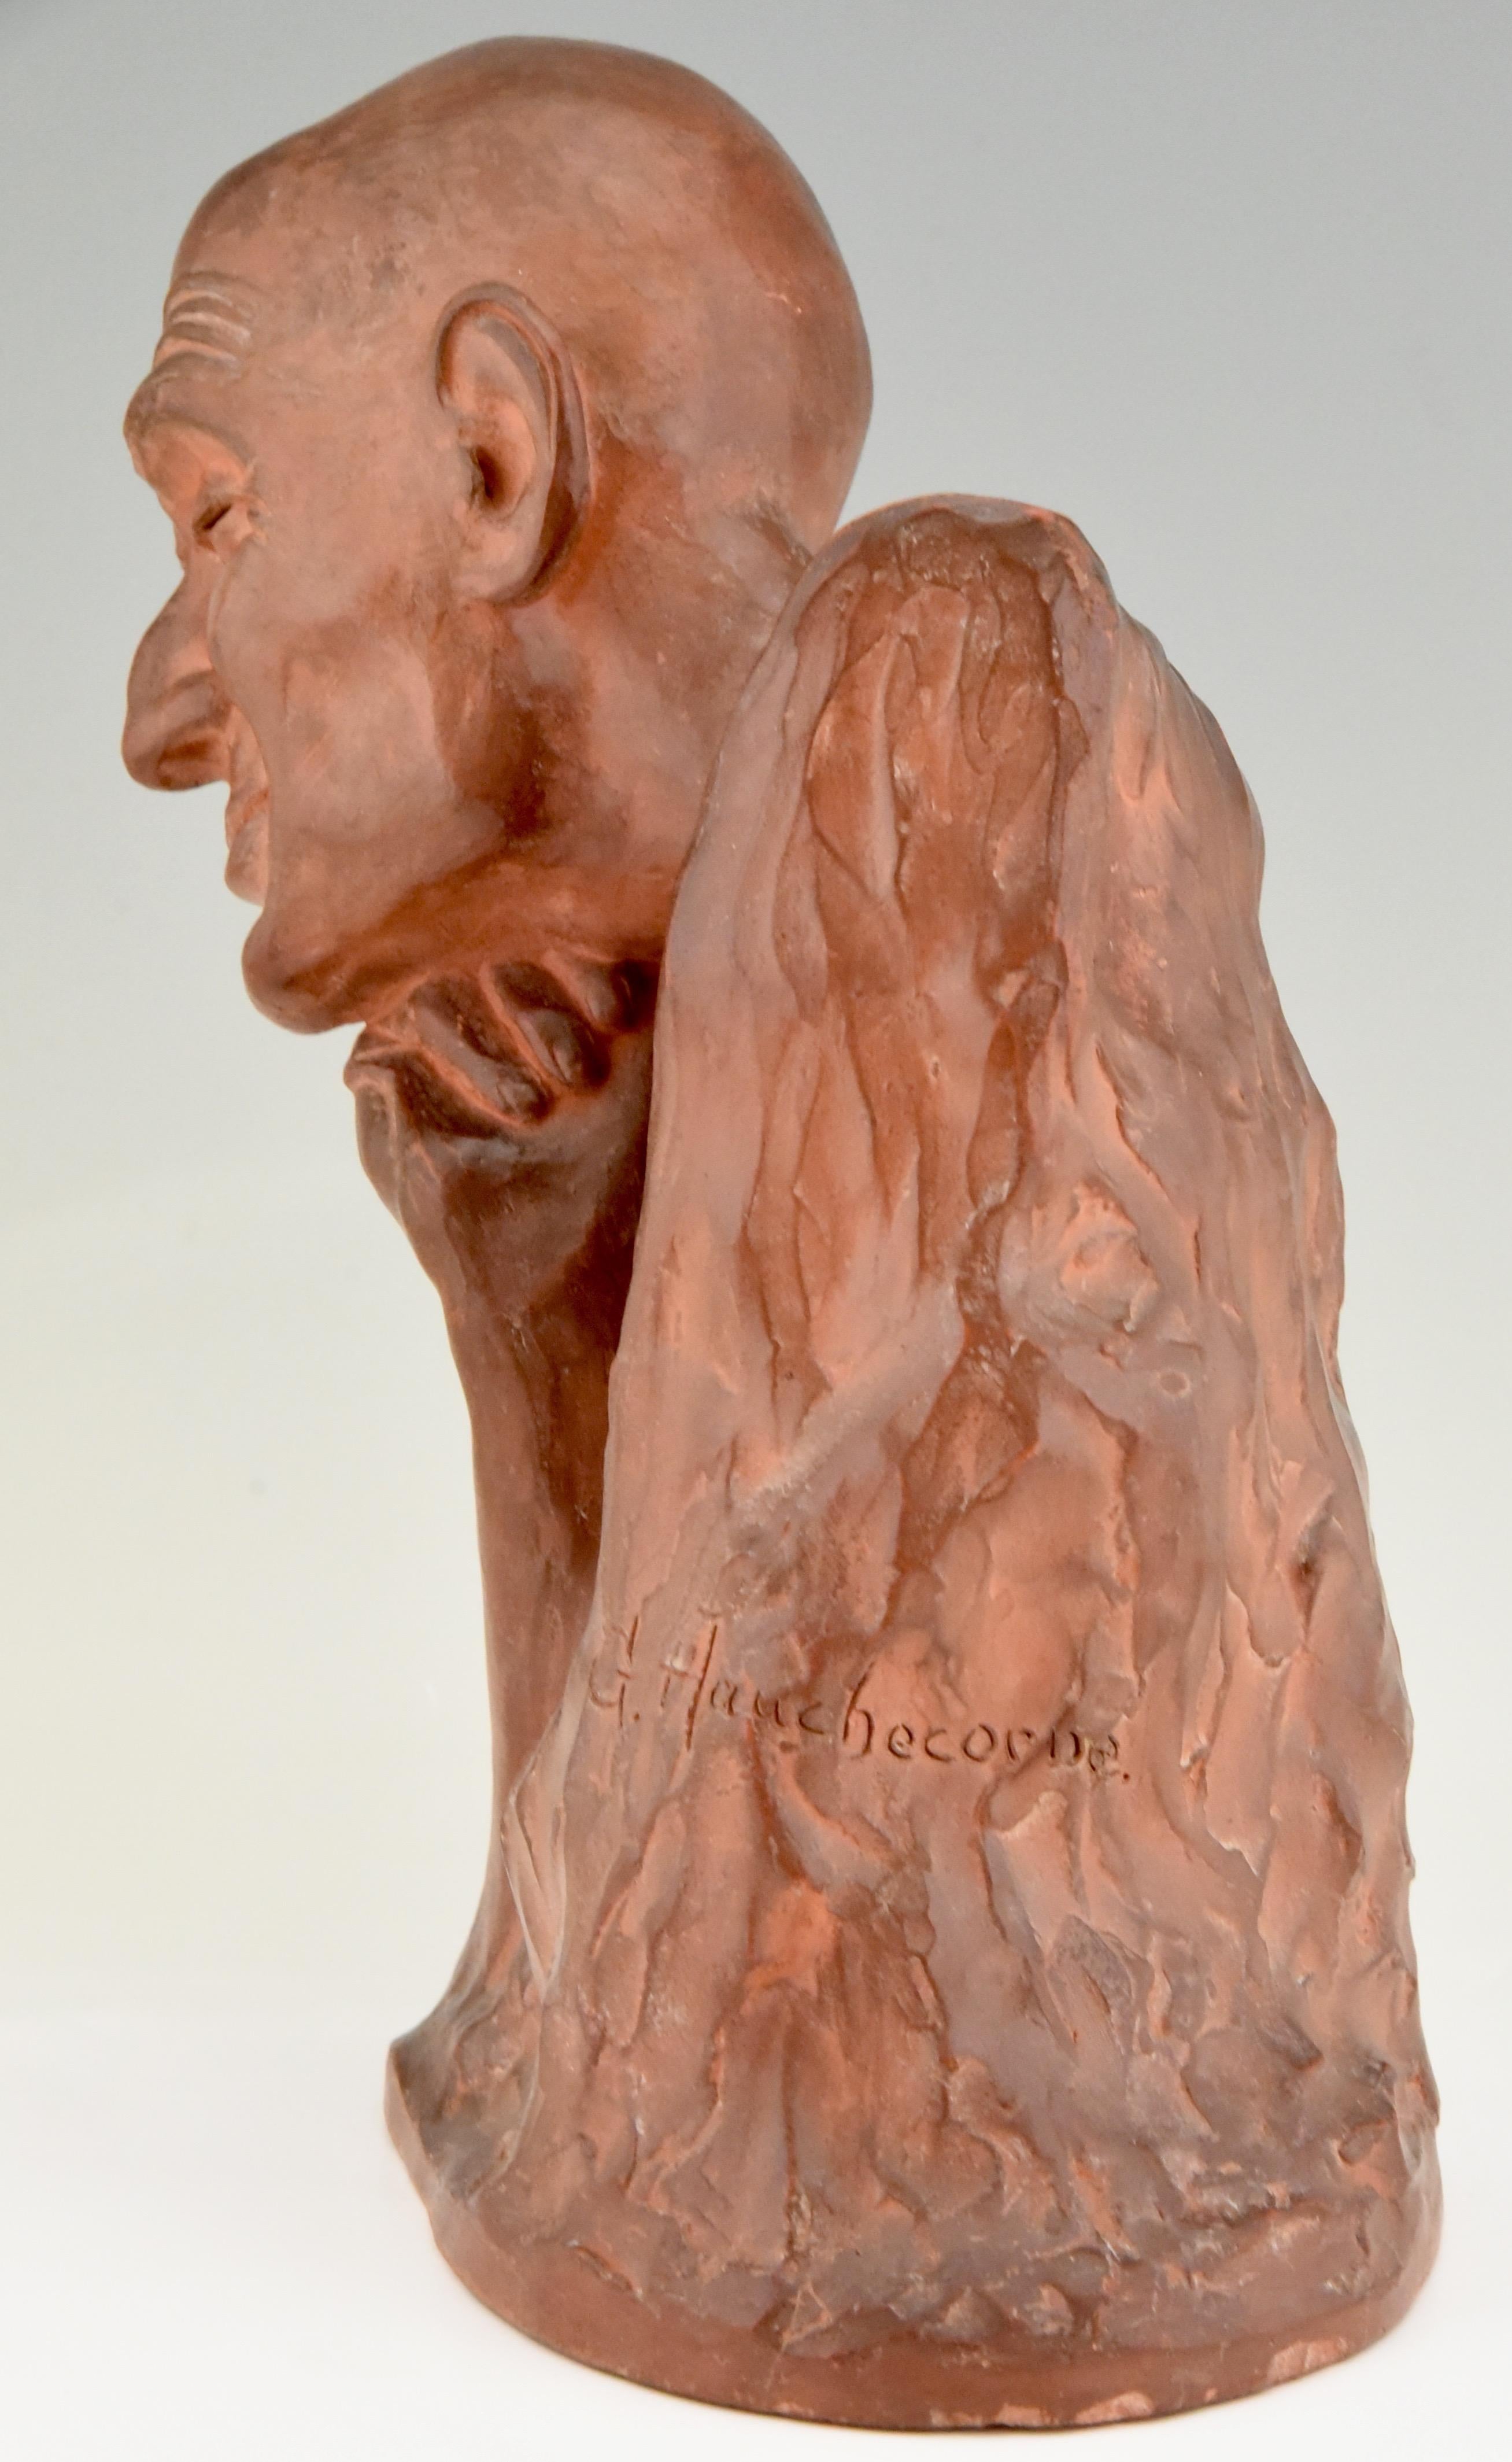 French Art Deco Terracotta Sculpture Bust of a Man Gaston Hauchecorne, France, 1925